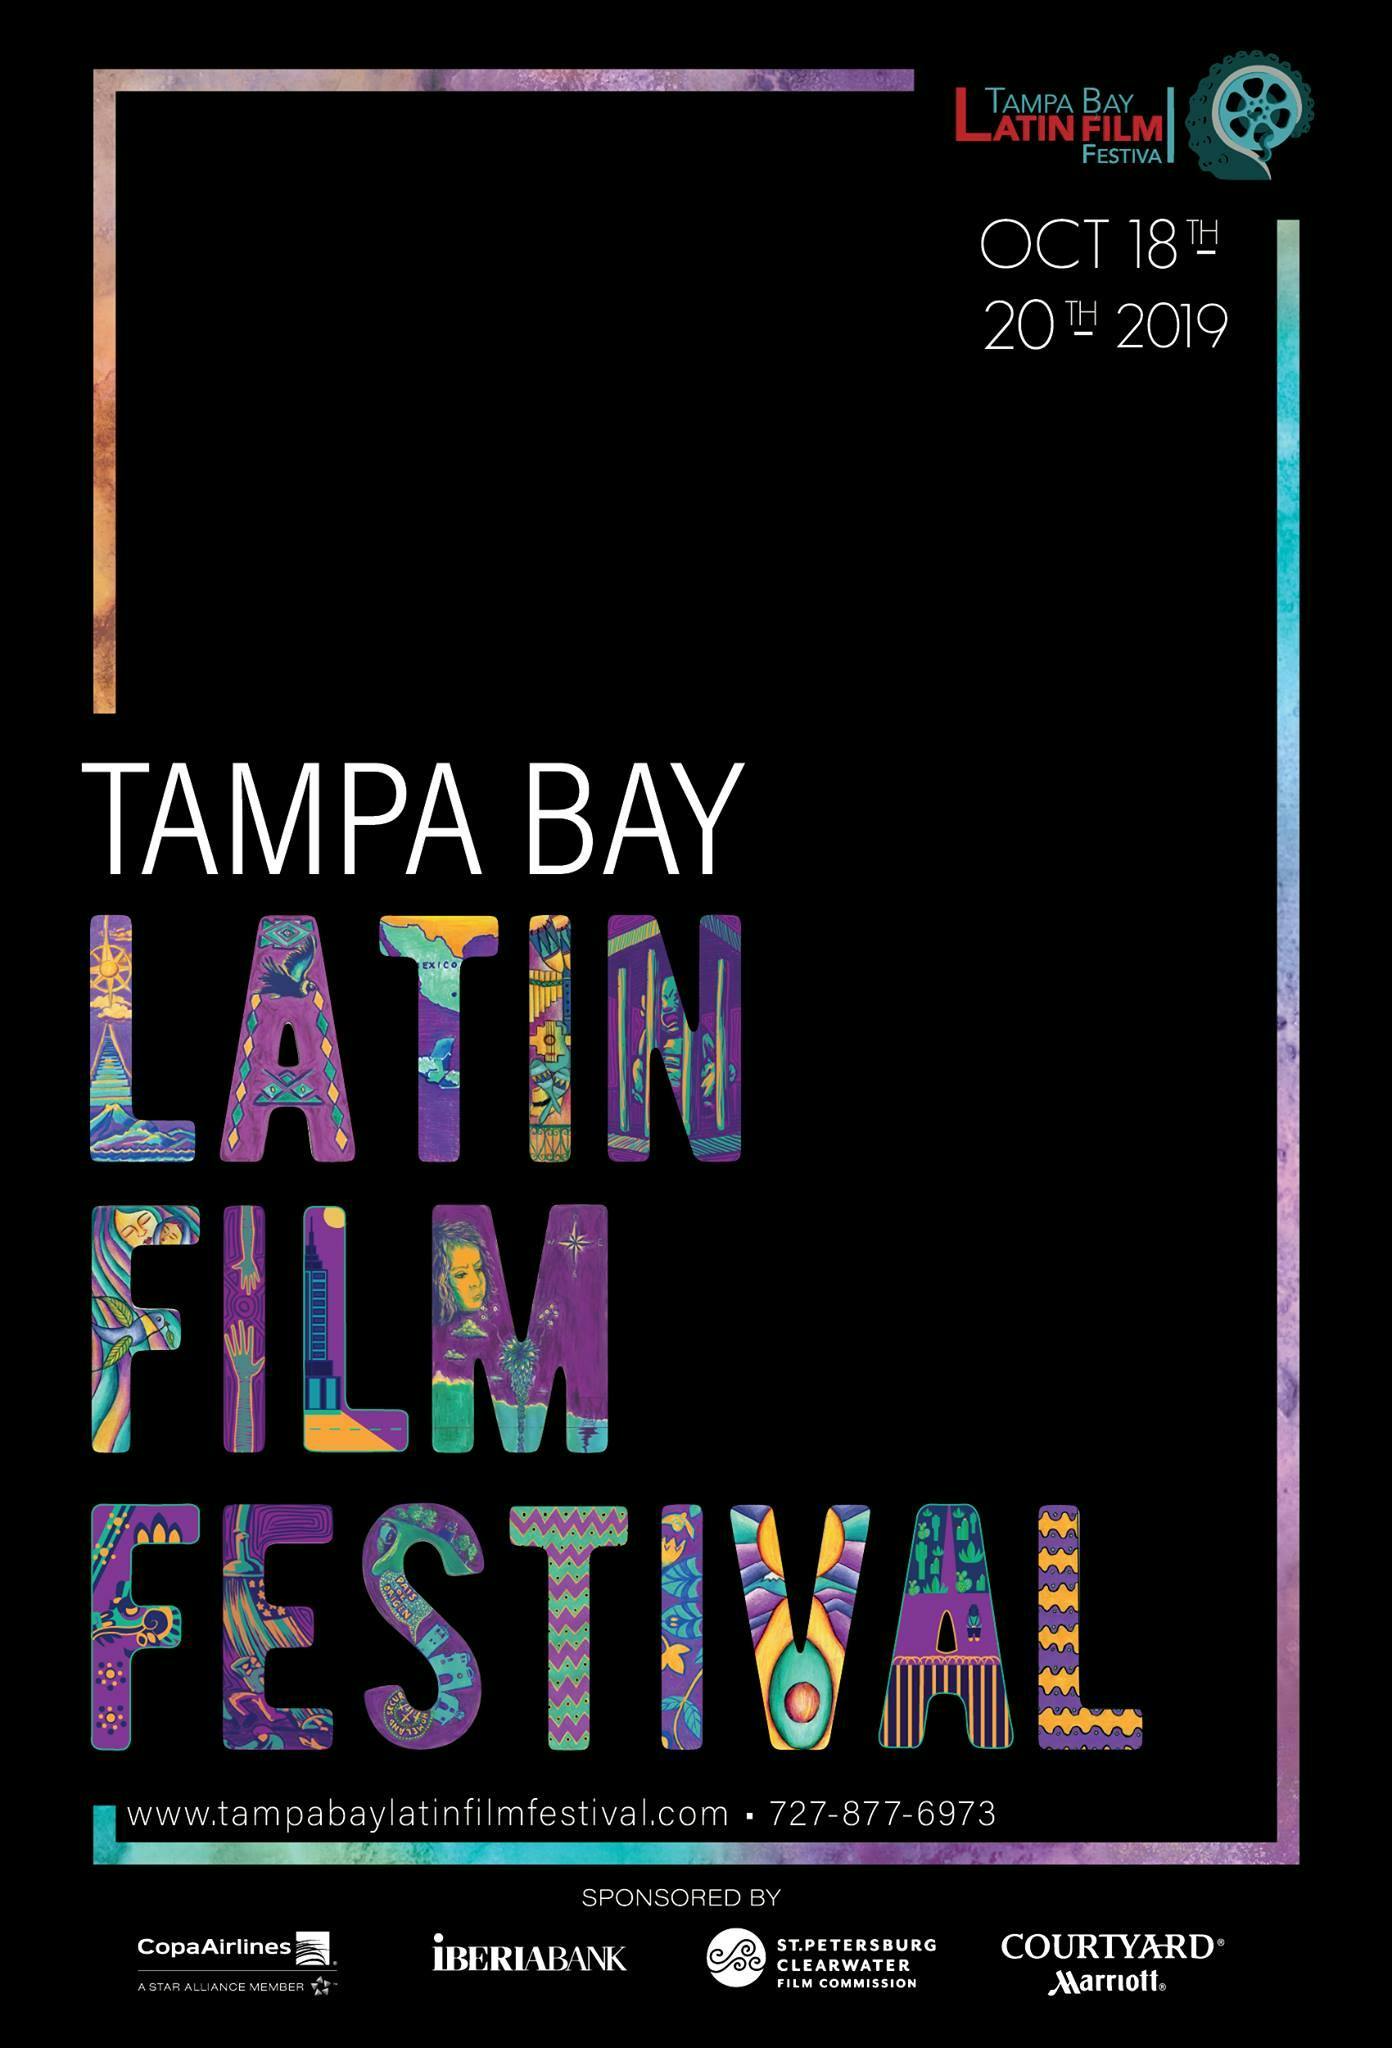 Tampa Bay Latin Film Festival October 18-20, 2019